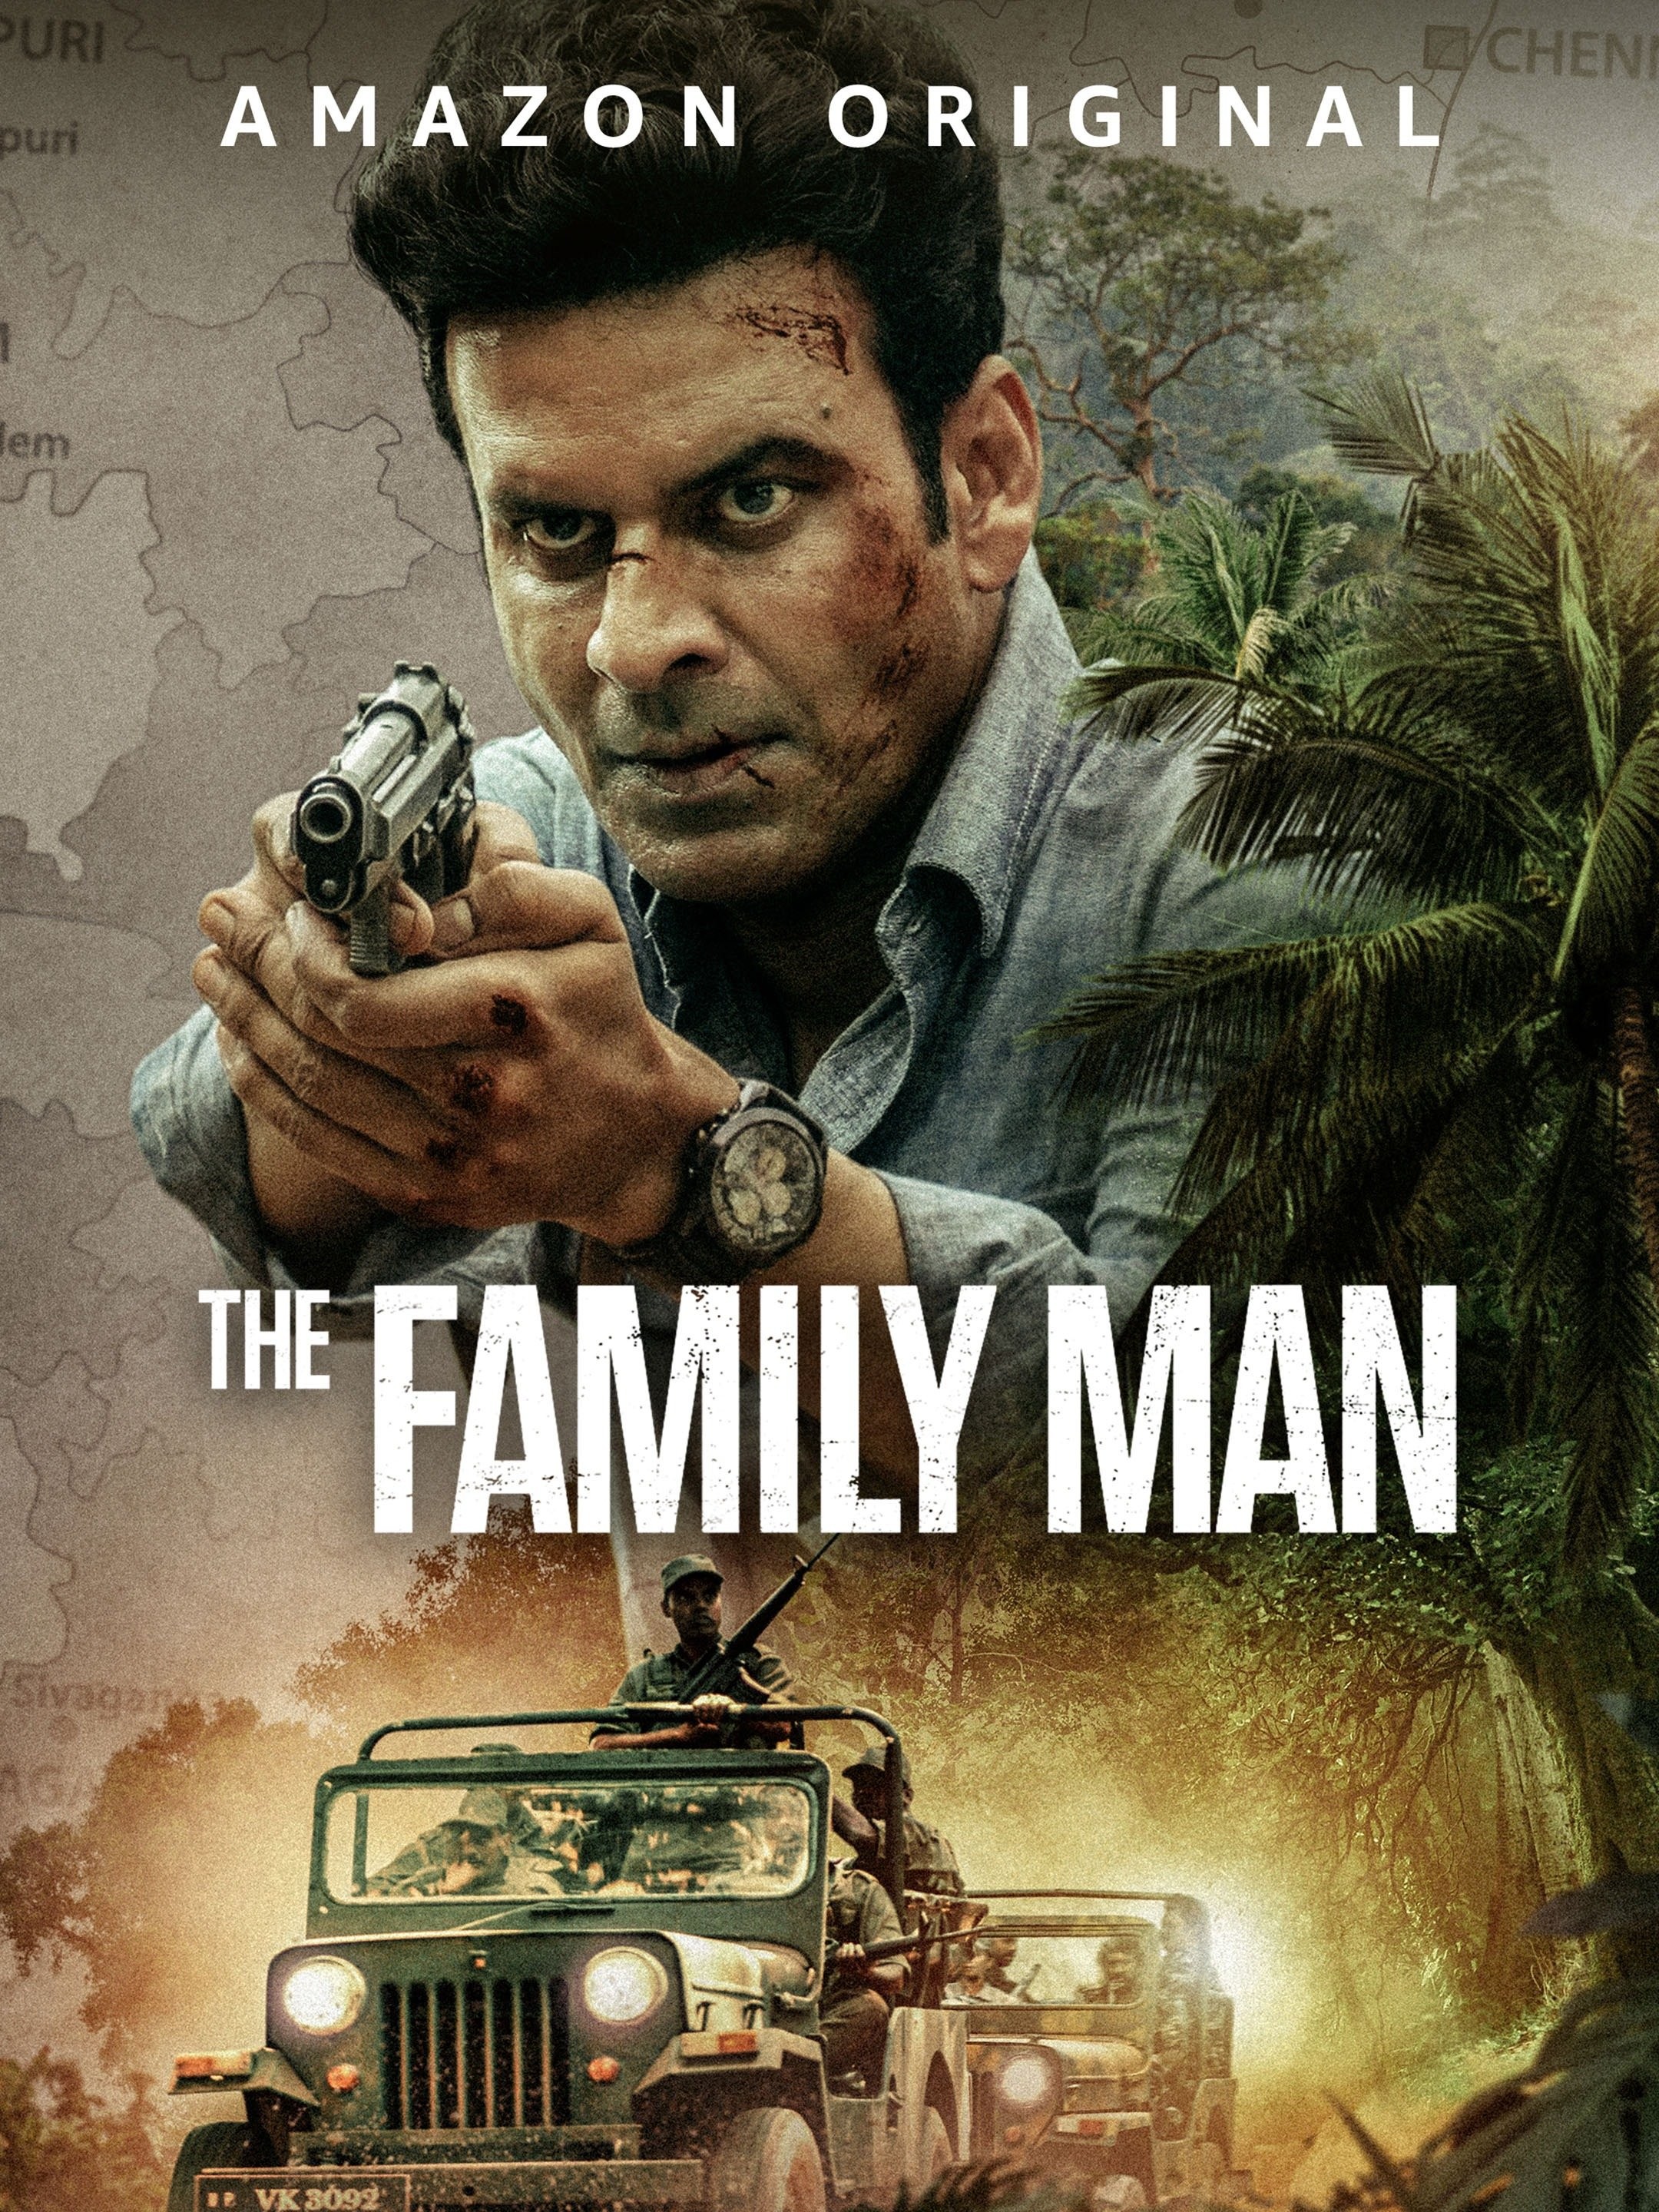 The Family Man' season 2 completes shoot - The Week